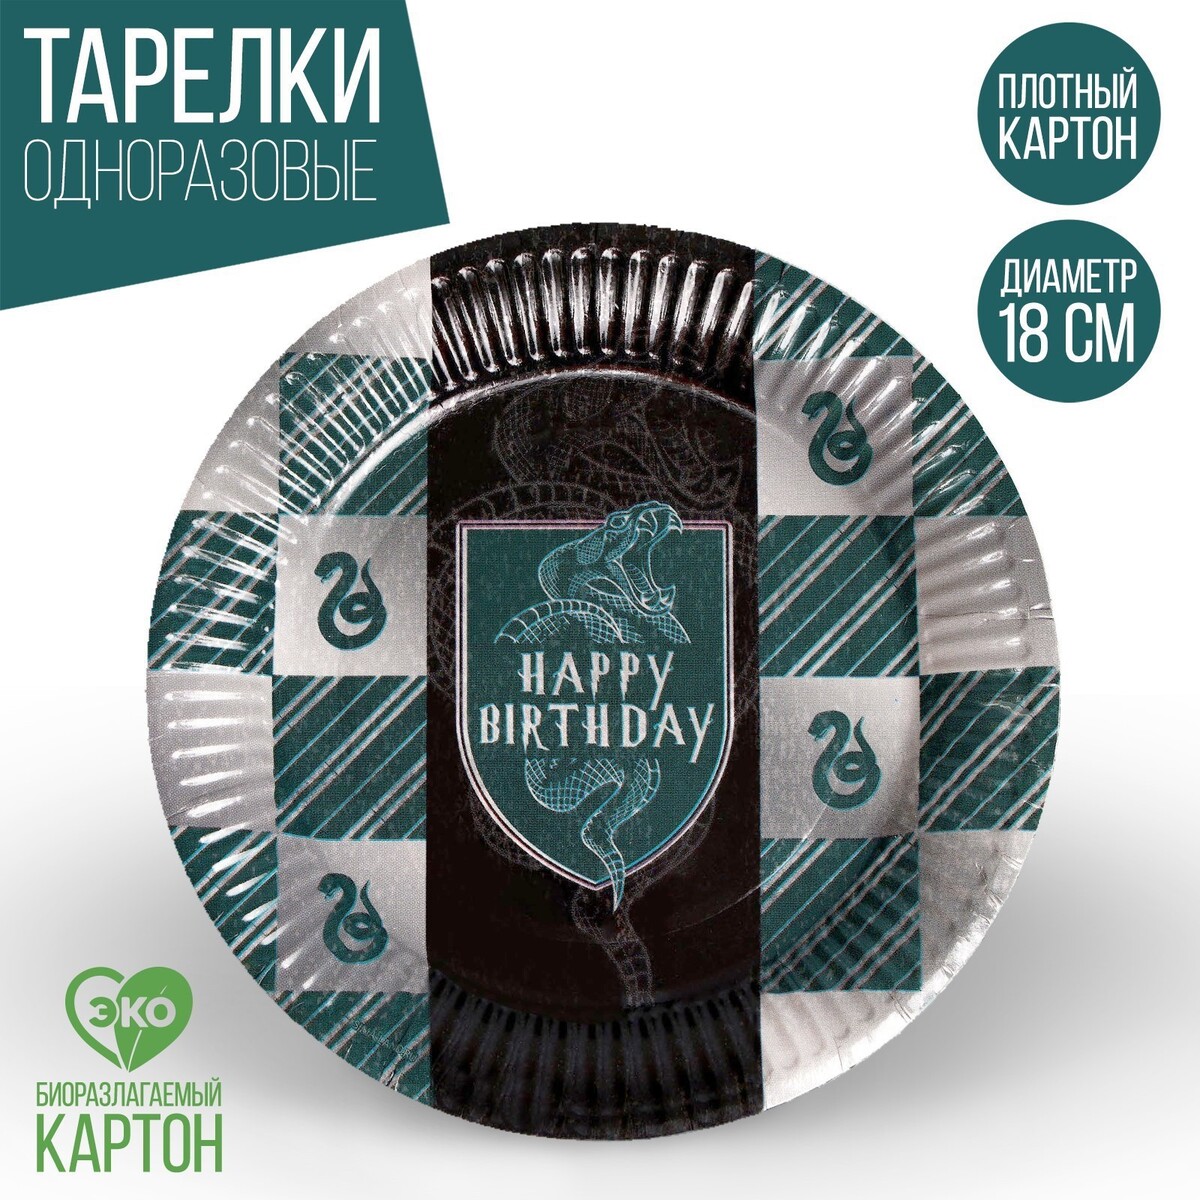 Тарелка одноразовая бумажная happy birthday, цвет зеленый, набор 6 шт, 18 см топпер акрил happy birthday